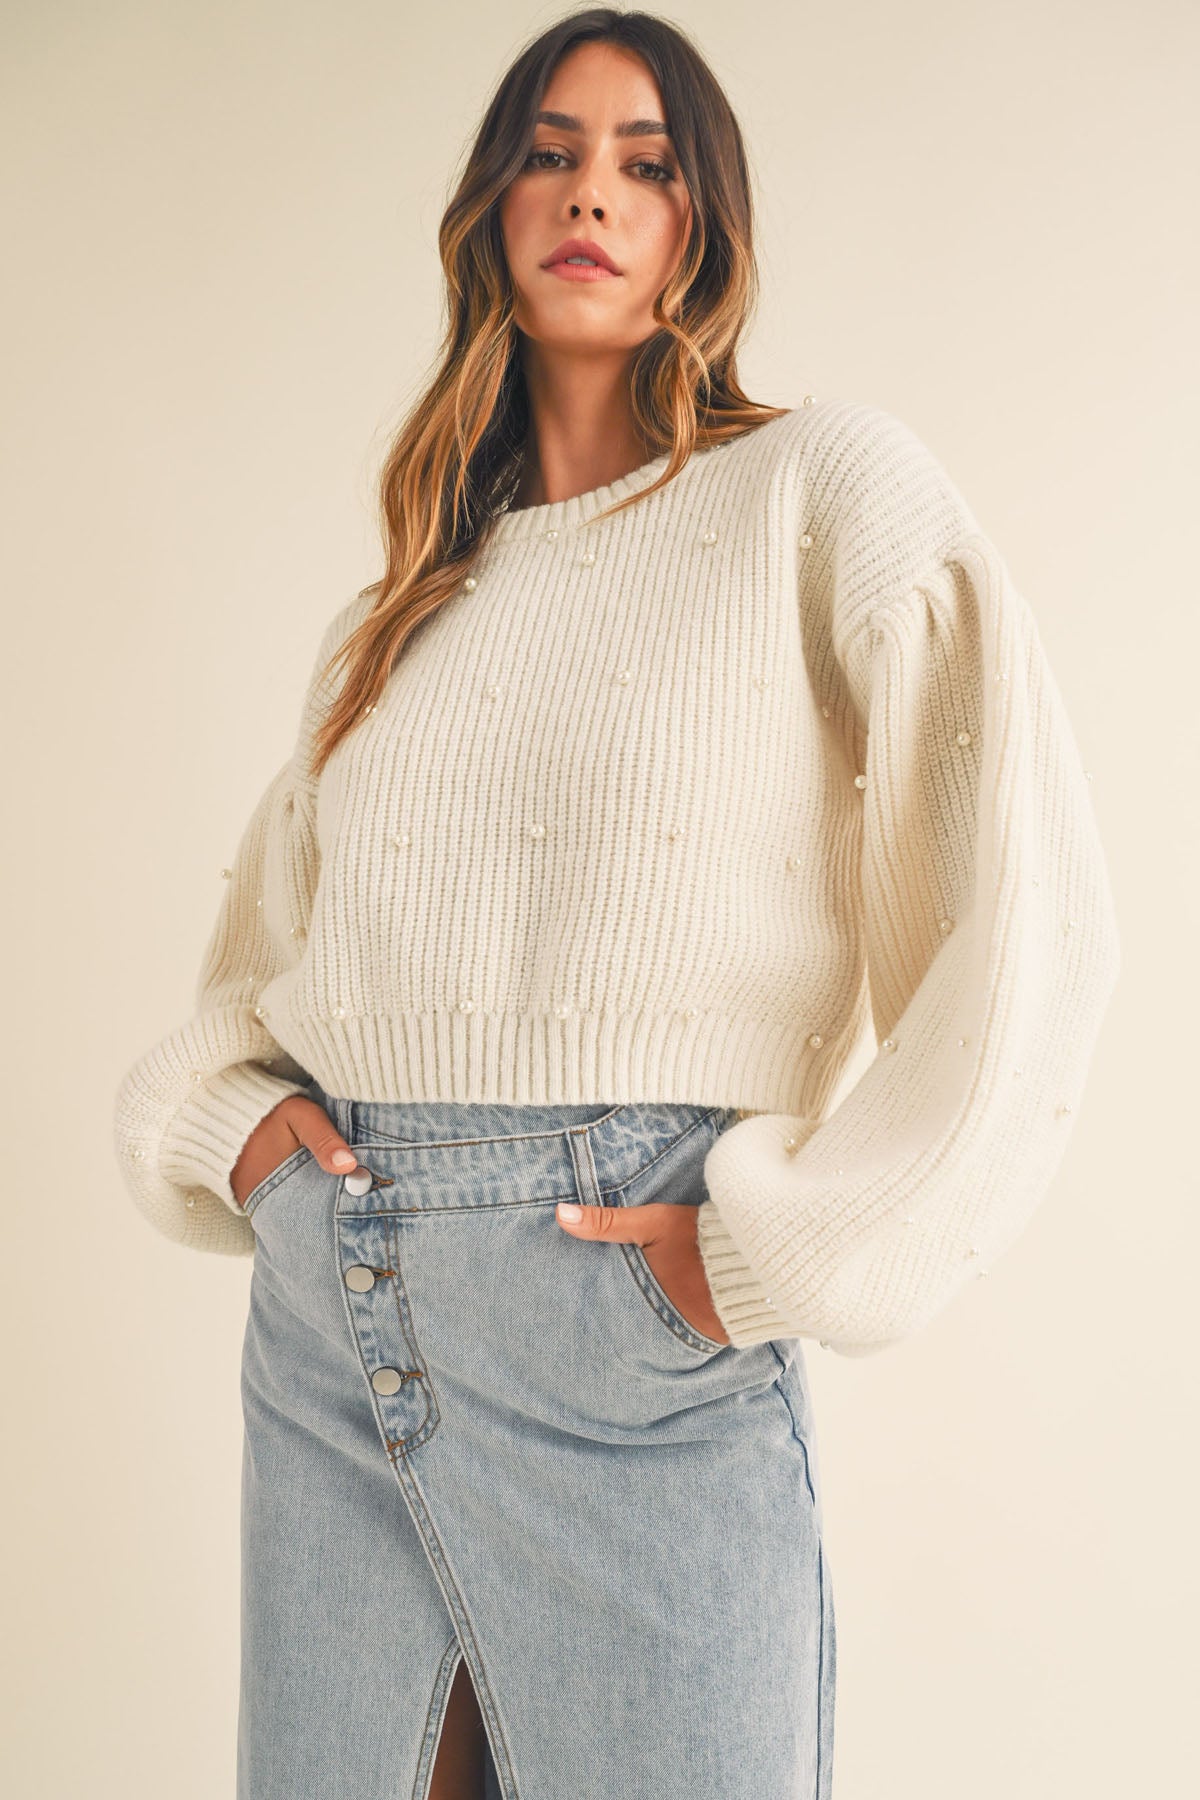 Charlotte Pearl Beaded Sweater - Cream